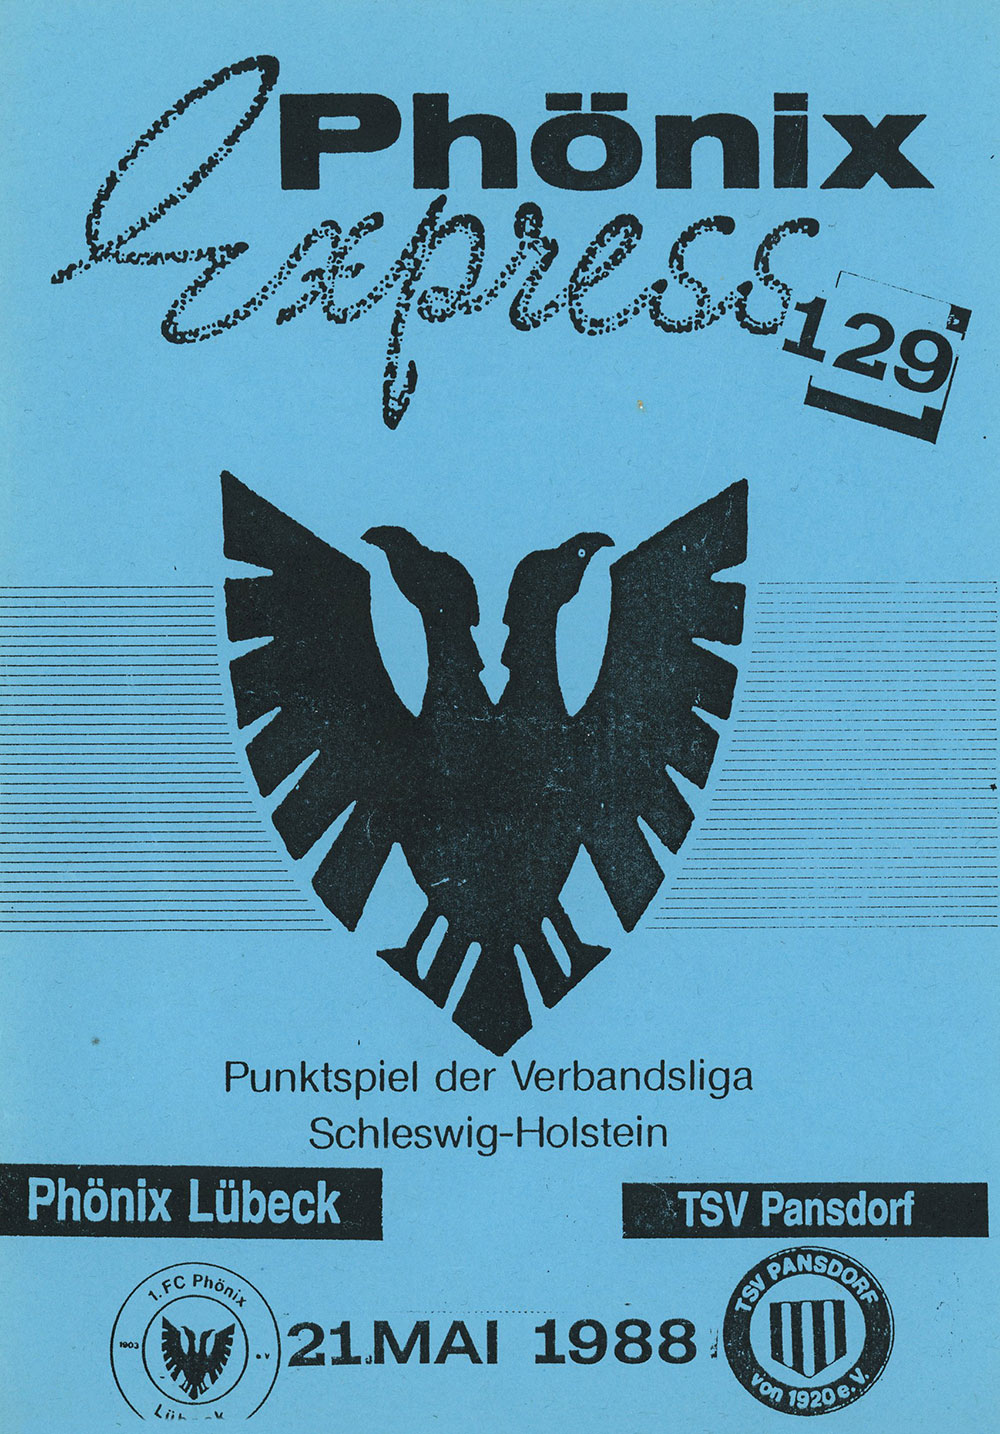 Phönix Express Nr. 129 vom 21.5.1988